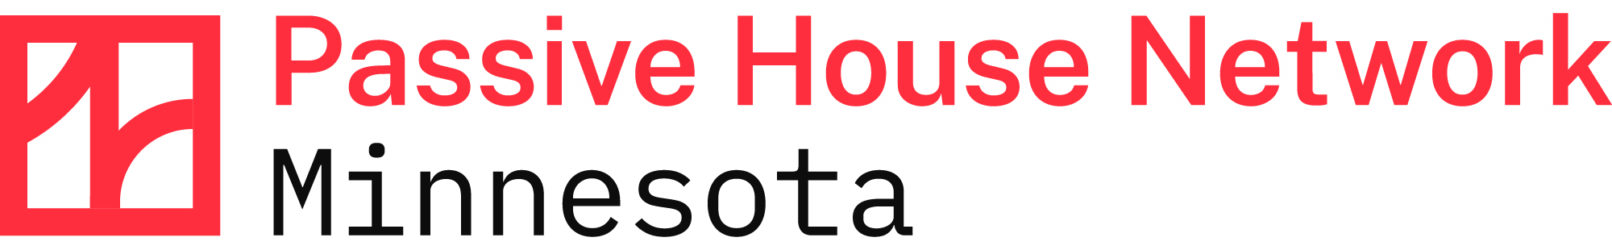 Passive House Minnesota